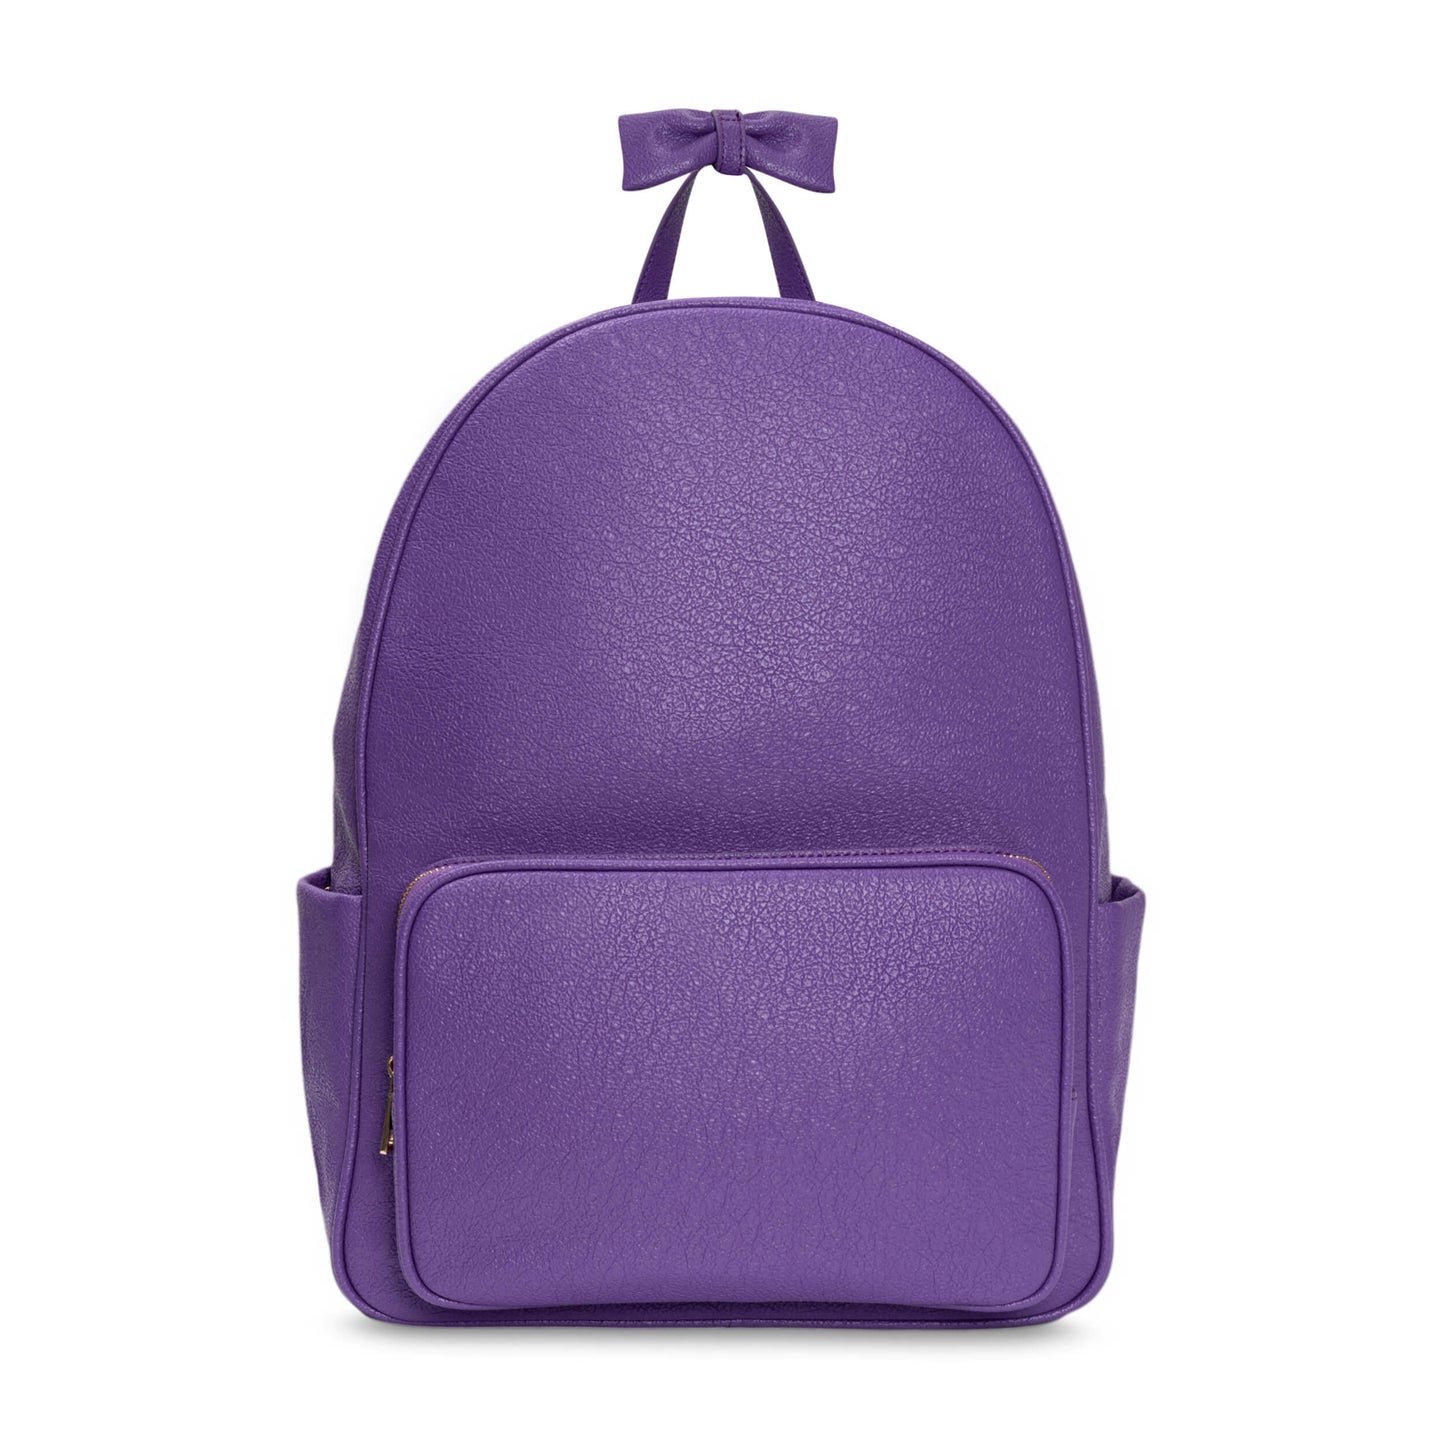 The Taly Backpack - Joyful Purple (Customizable)